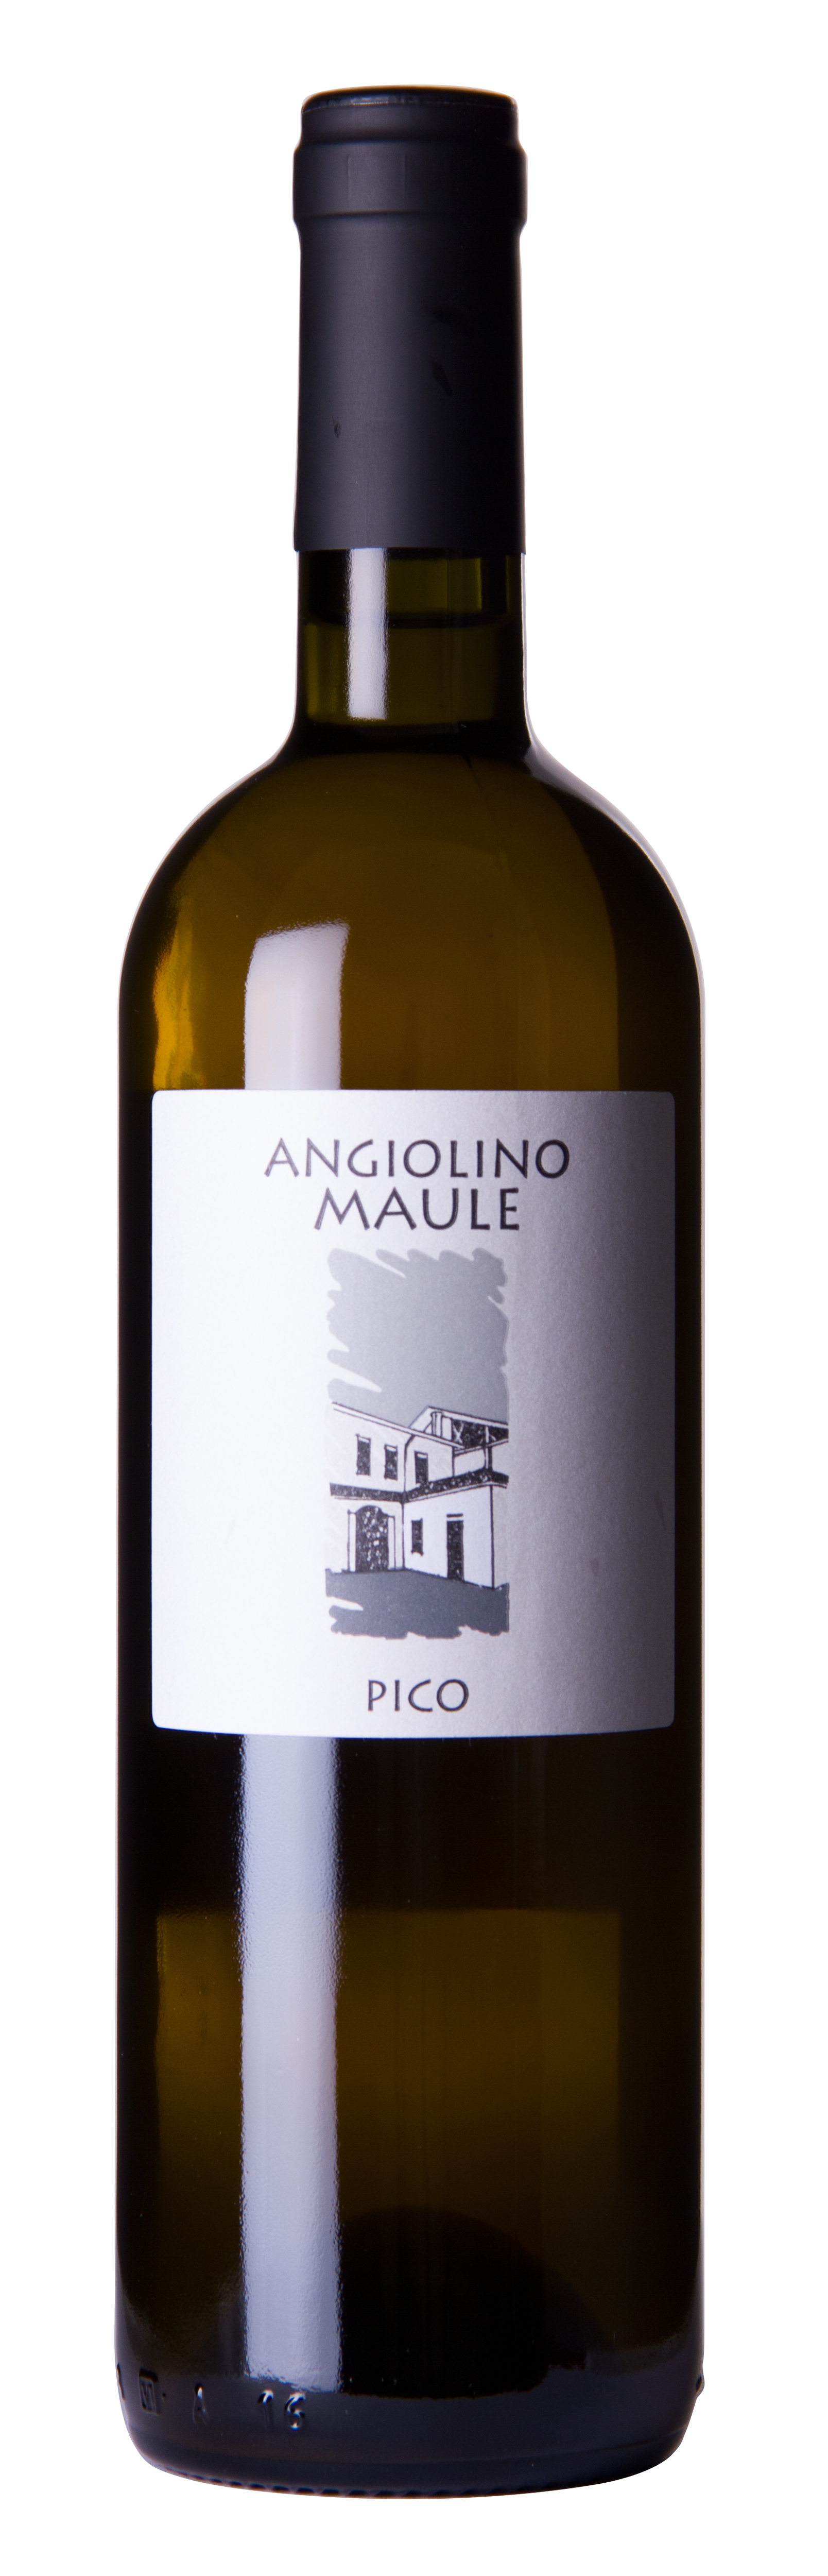 angiolino-maule-pico-veneto-075